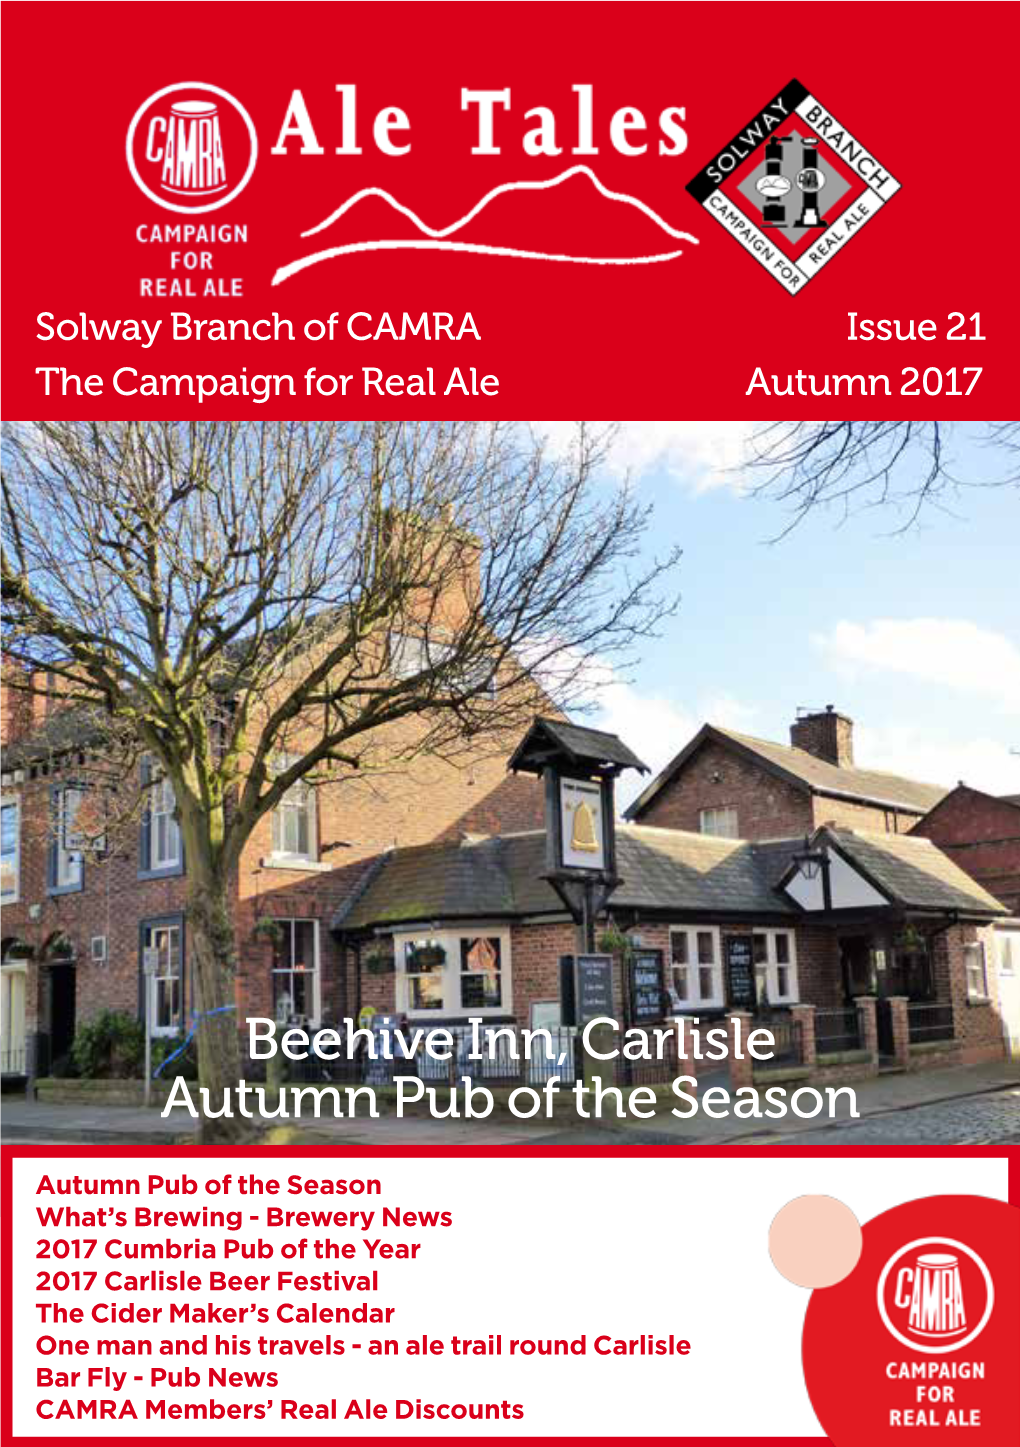 Beehive Inn, Carlisle Autumn Pub of the Season